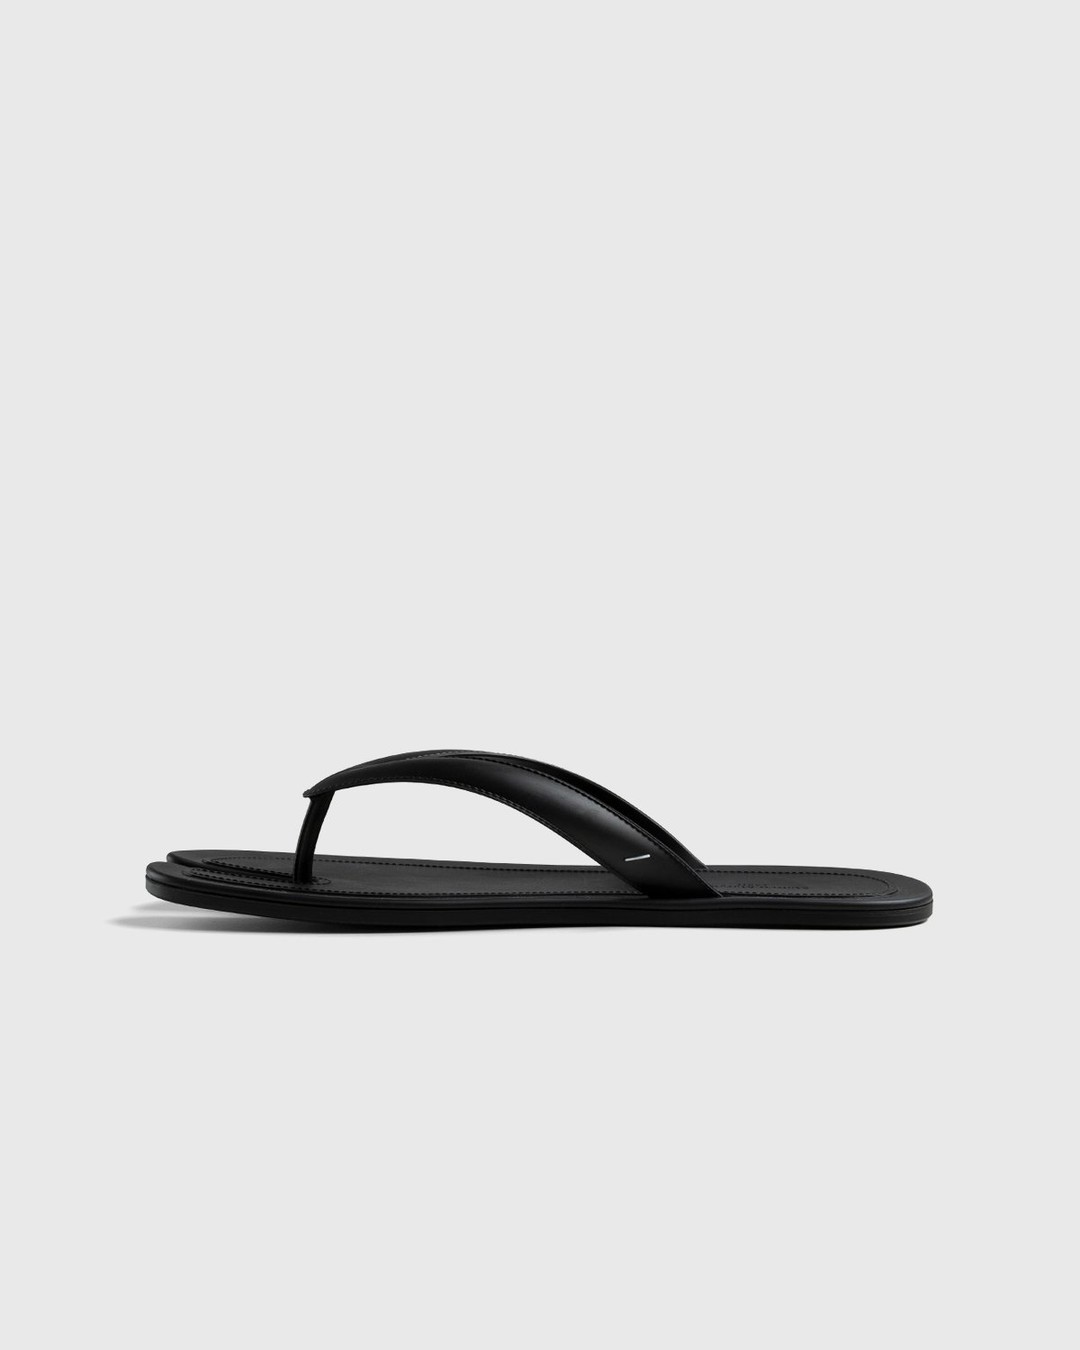 Maison Margiela – Tabi Flip-Flops Black - Flip Flops - Black - Image 3